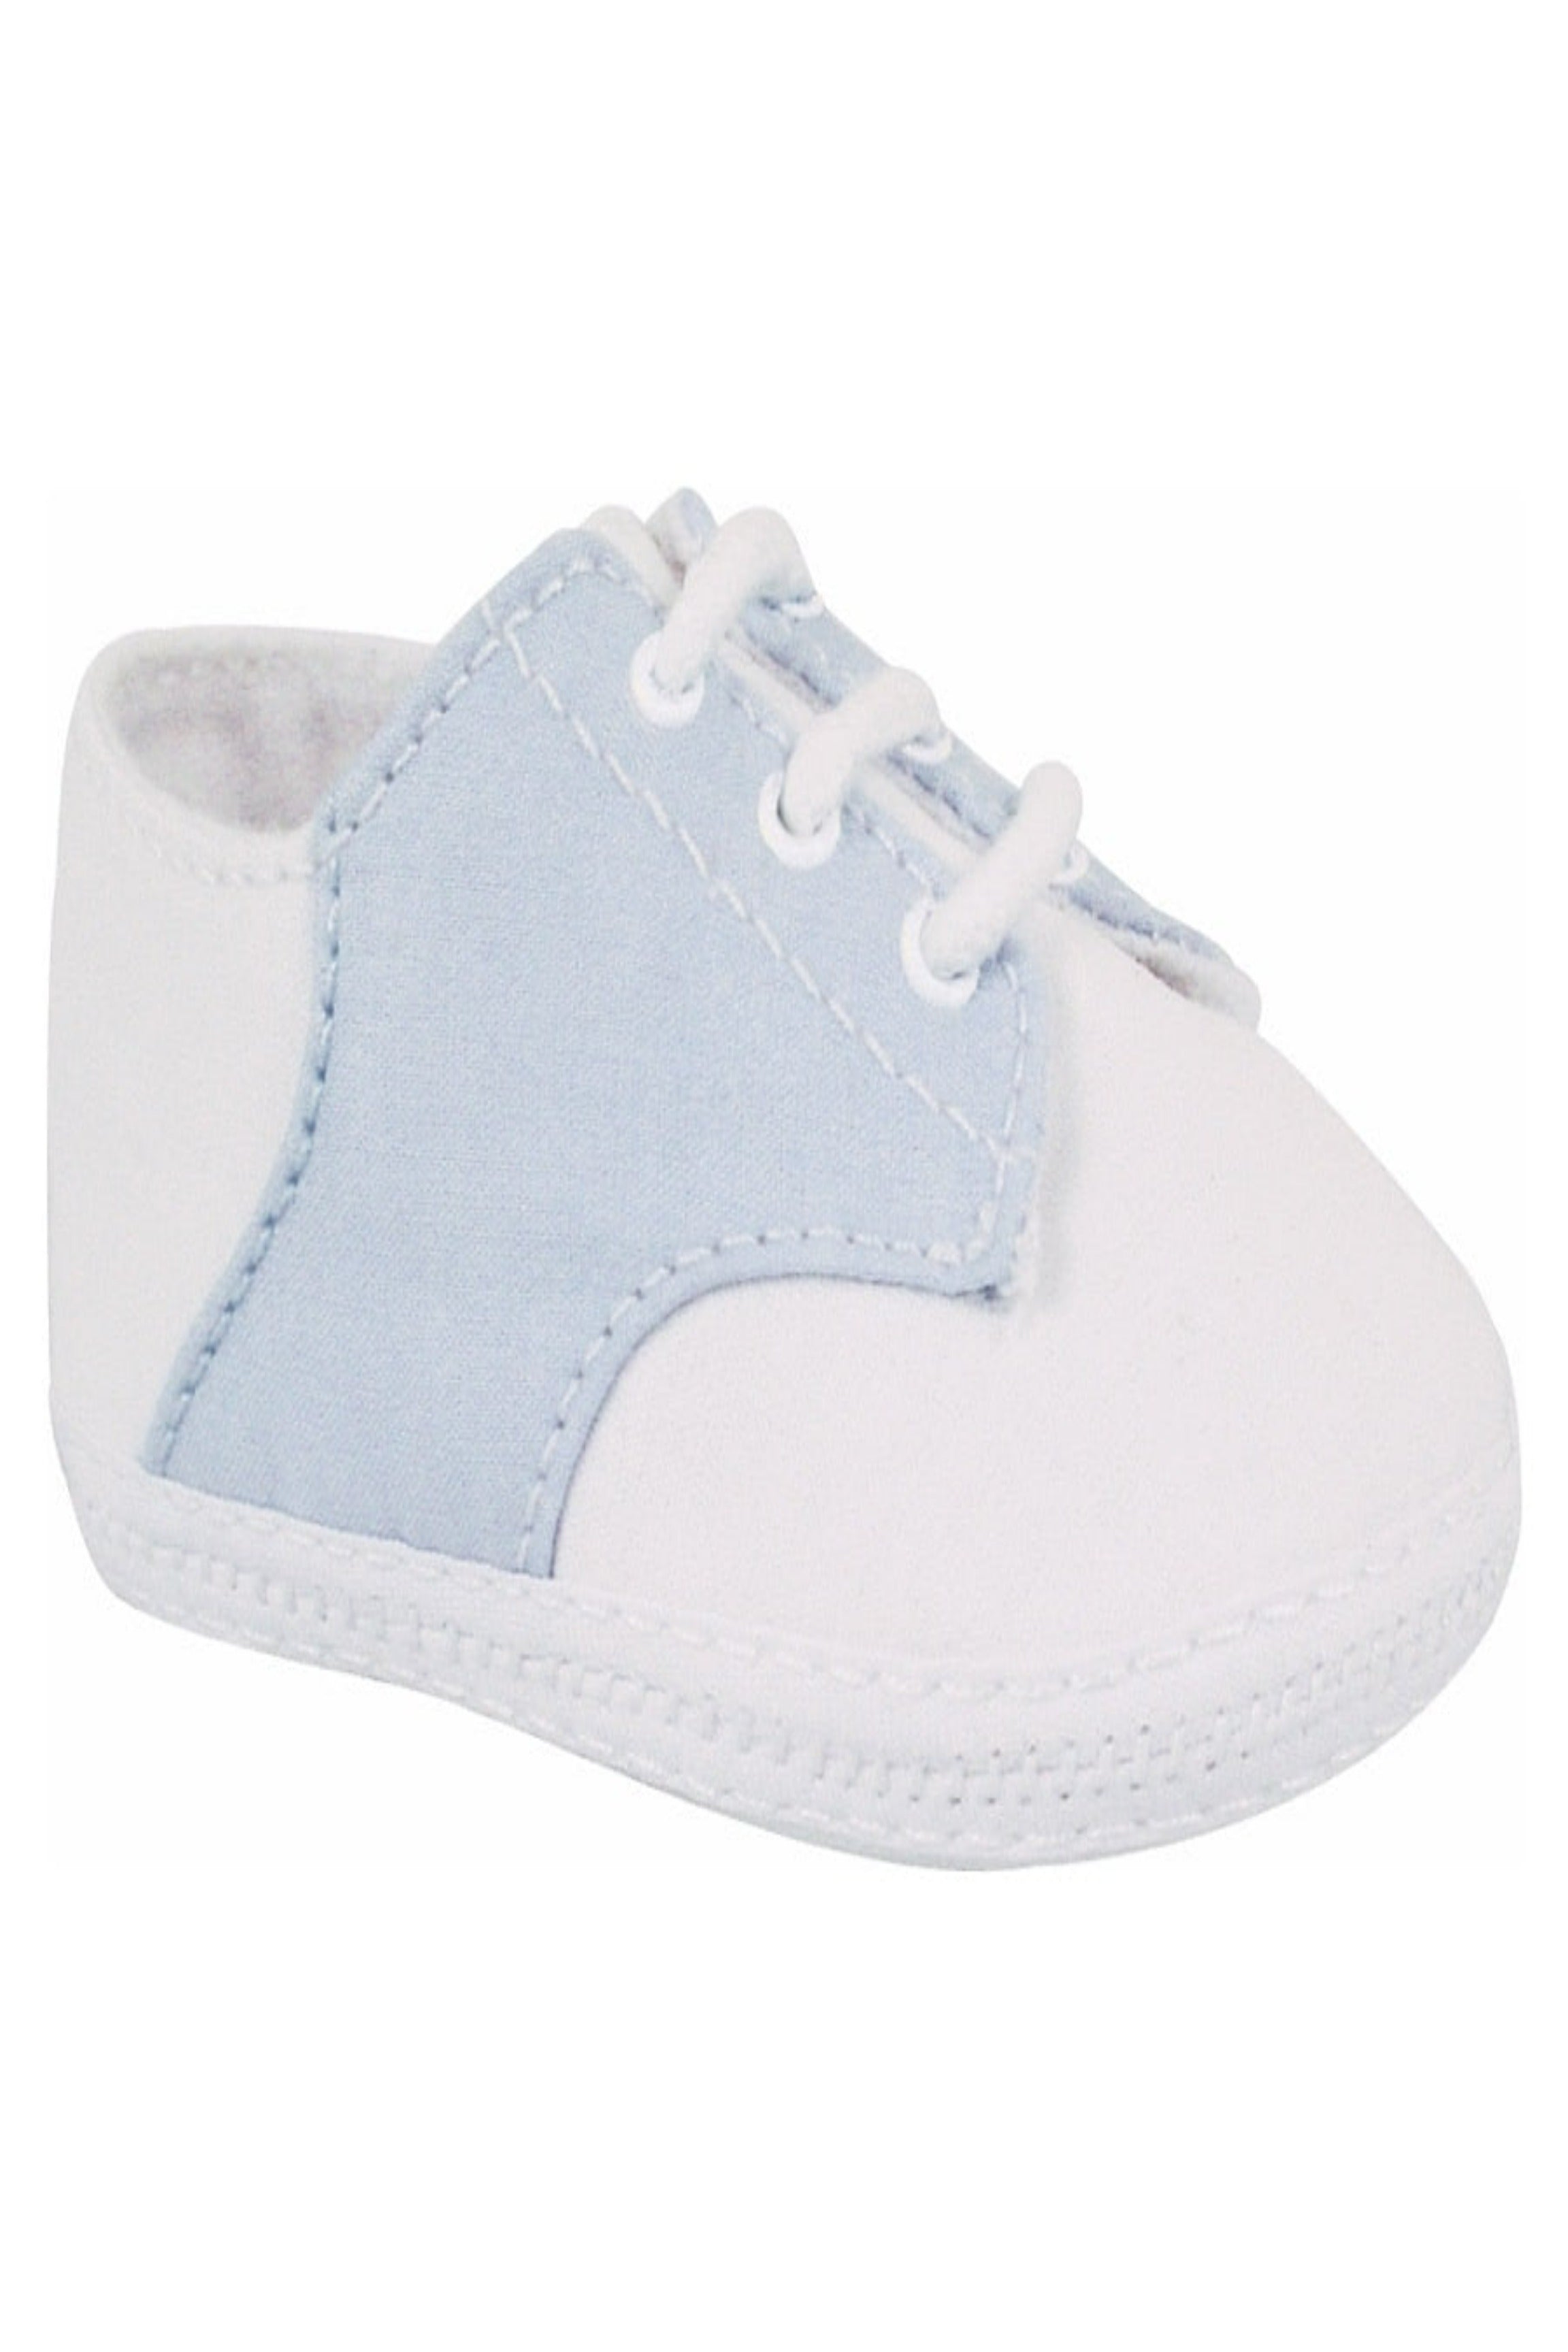 Crib Shoe White/Light Blue Fabric Oxford